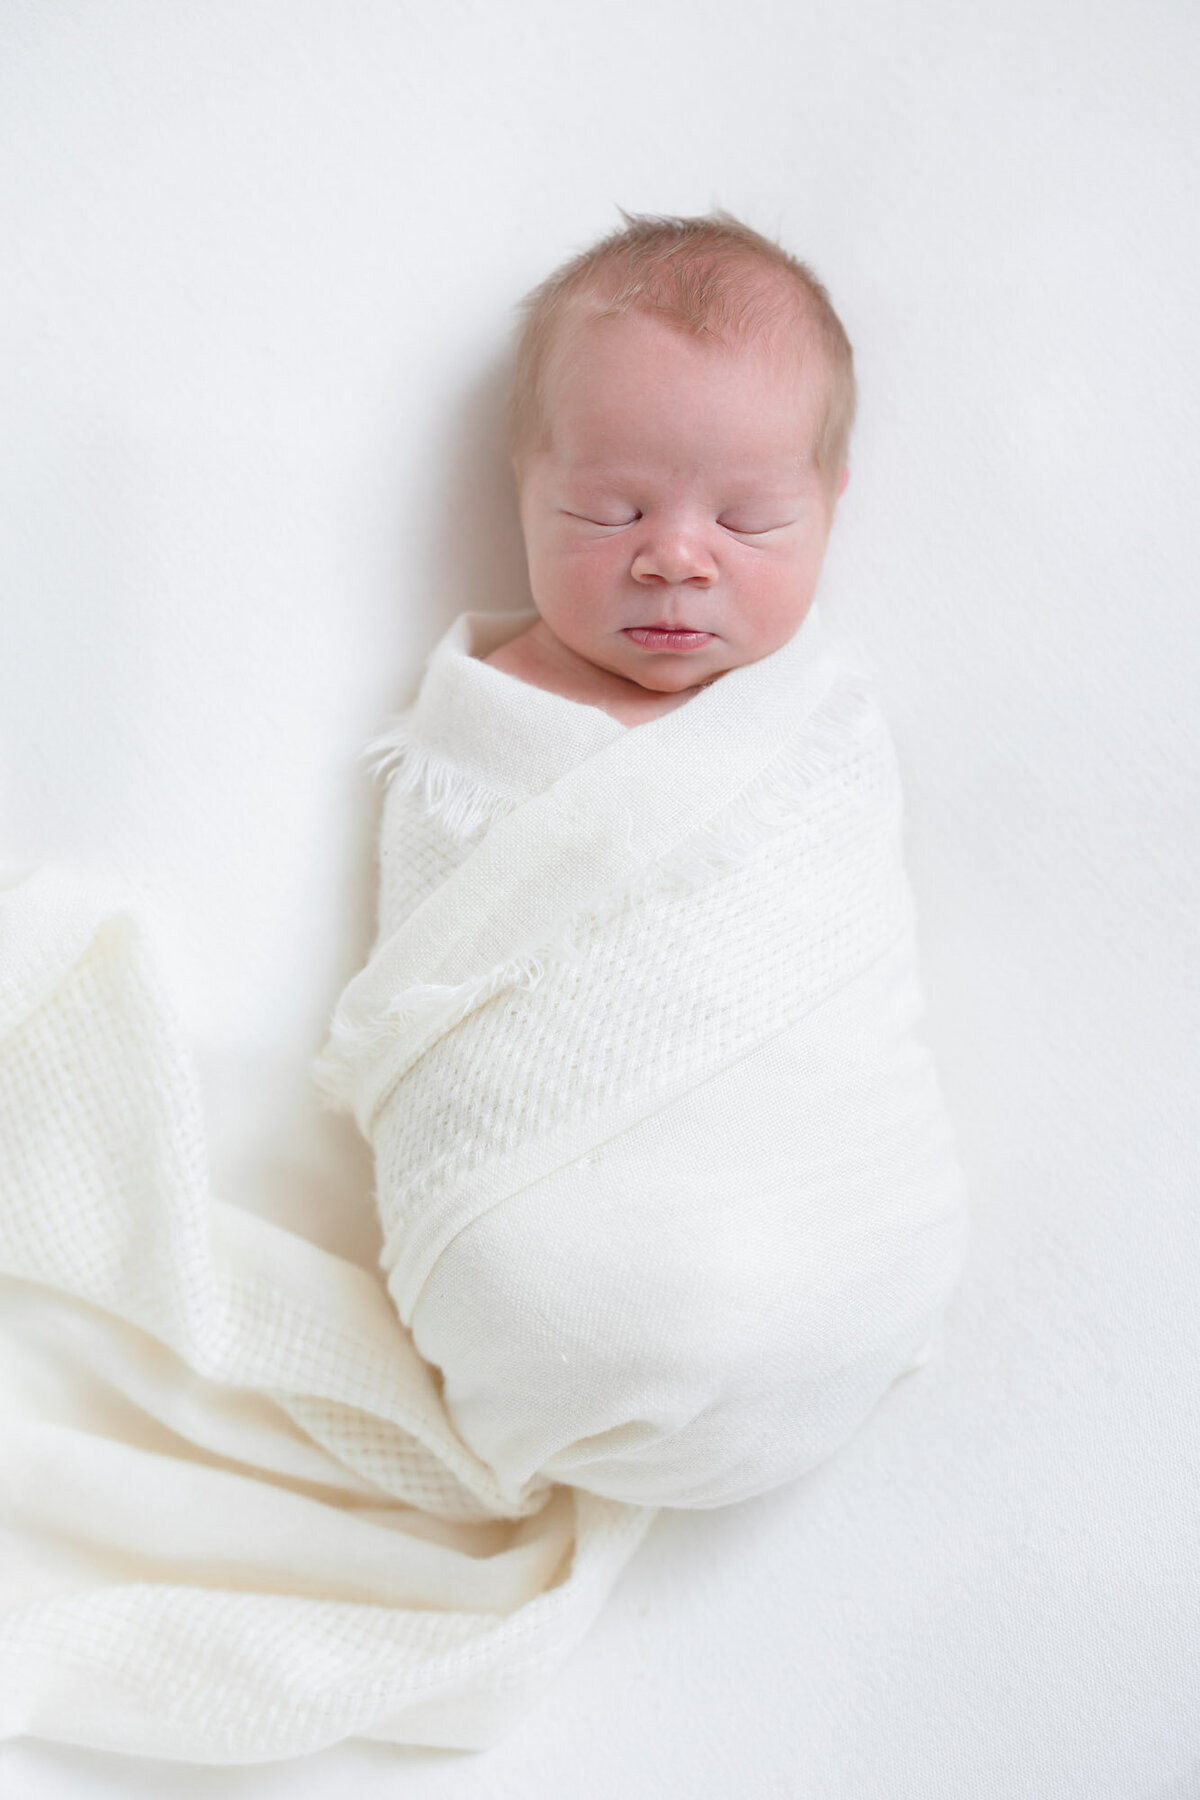 louisville-newborn-photographer-missy-marshall-20